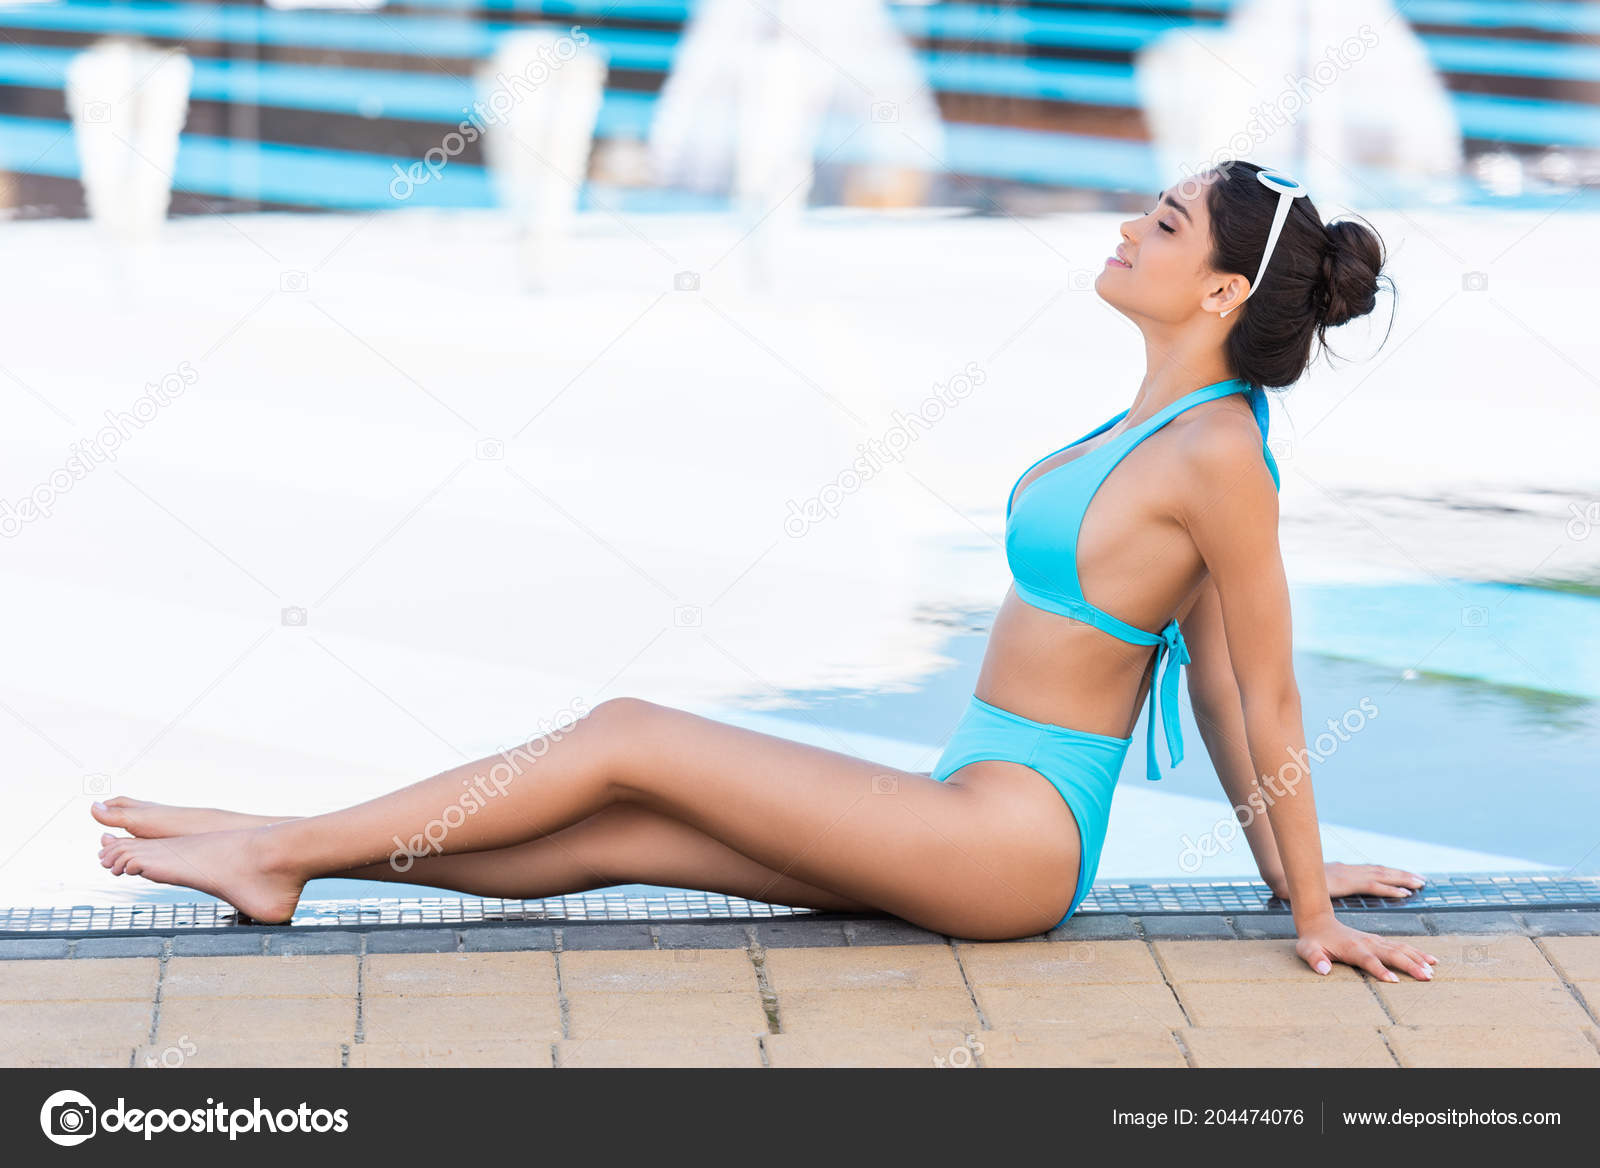 Chica Bronceada Bikini Azul Relajante Sol Piscina Foto de stock gratis © AllaSerebrina #204474076